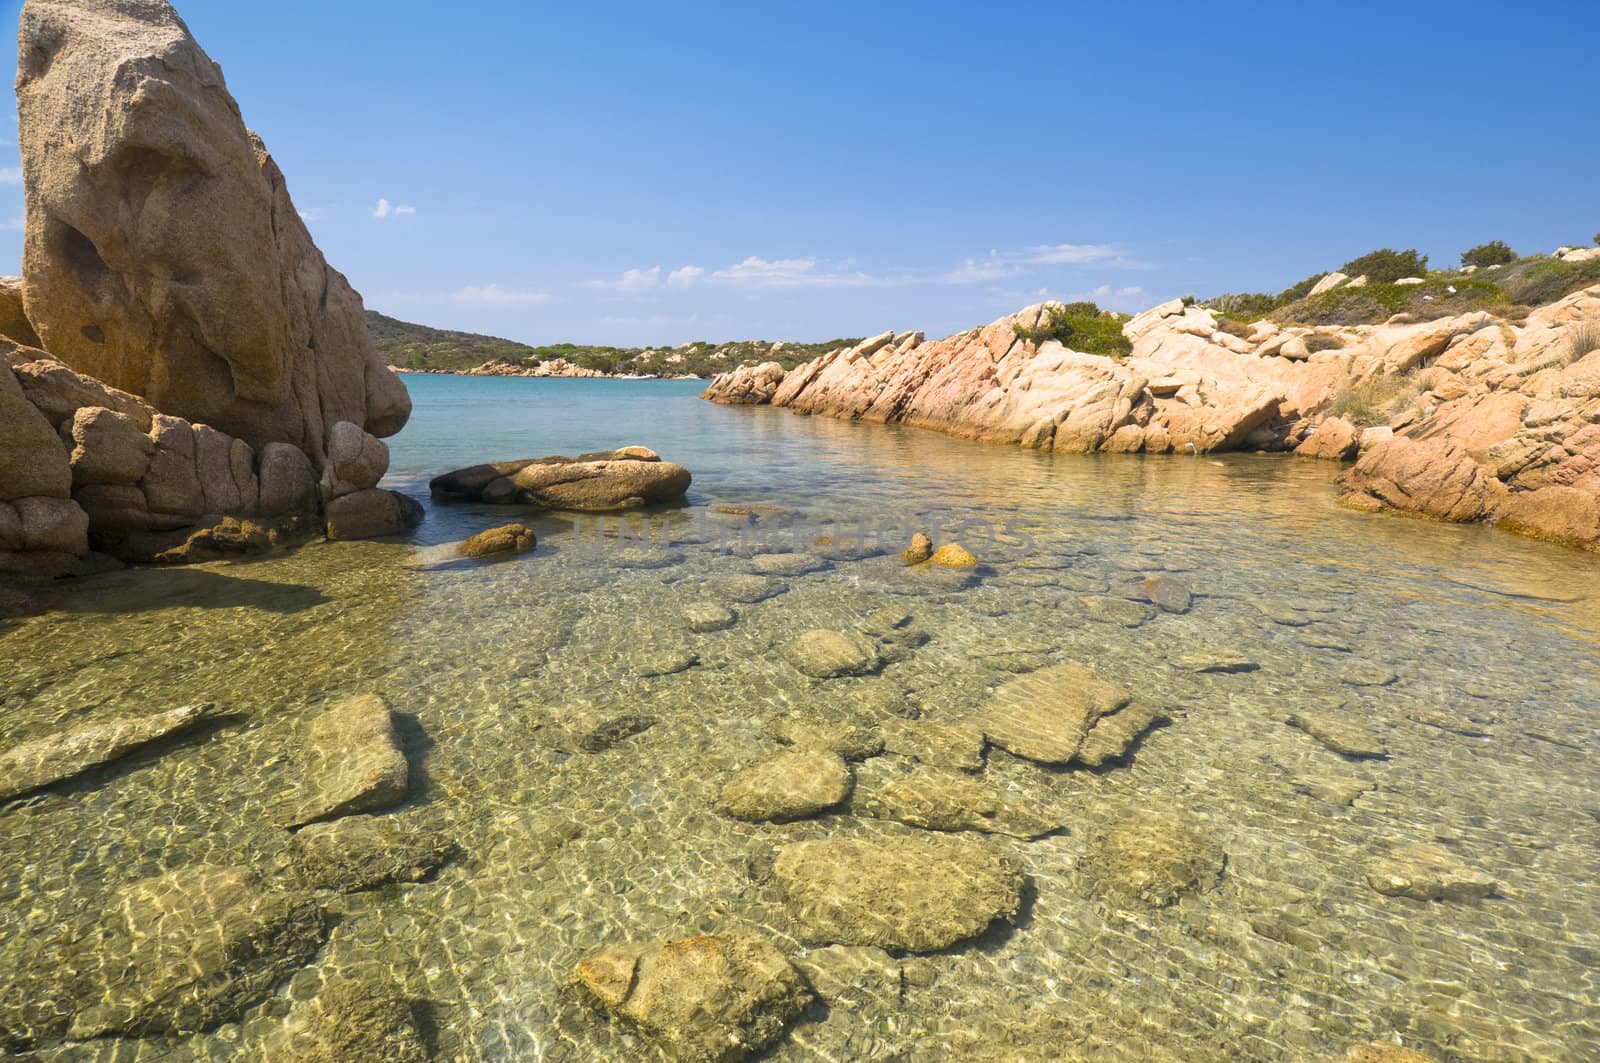 Clear water - Caprera island in Archipelago of La Maddalena. Best of Italy.